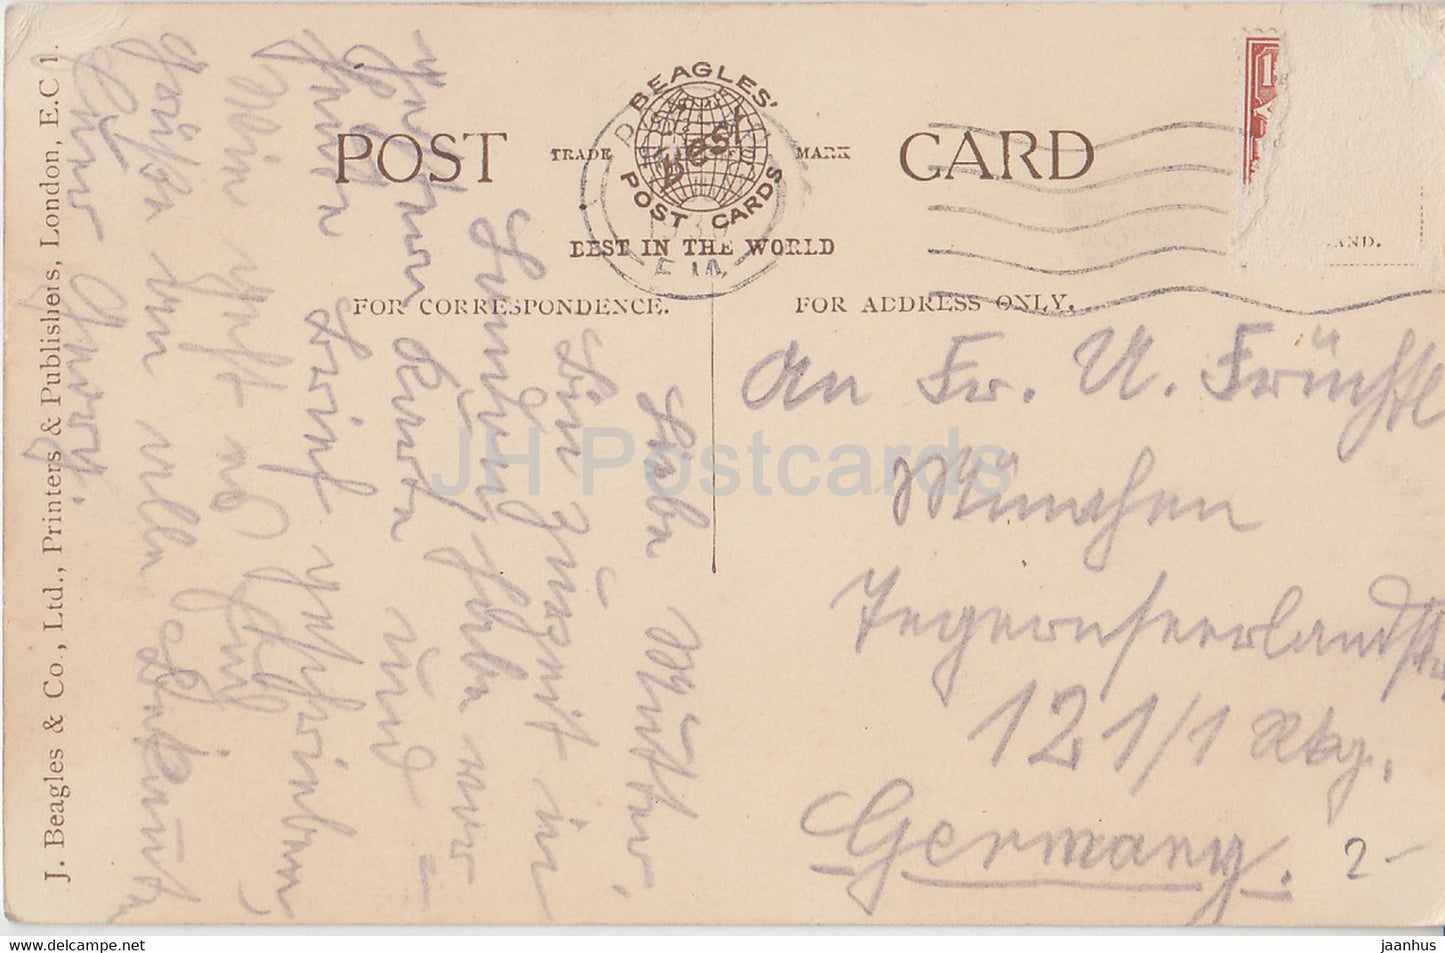 London - Trafalgar Square - Beagles - 134 - old postcard - England - United Kingdom - used